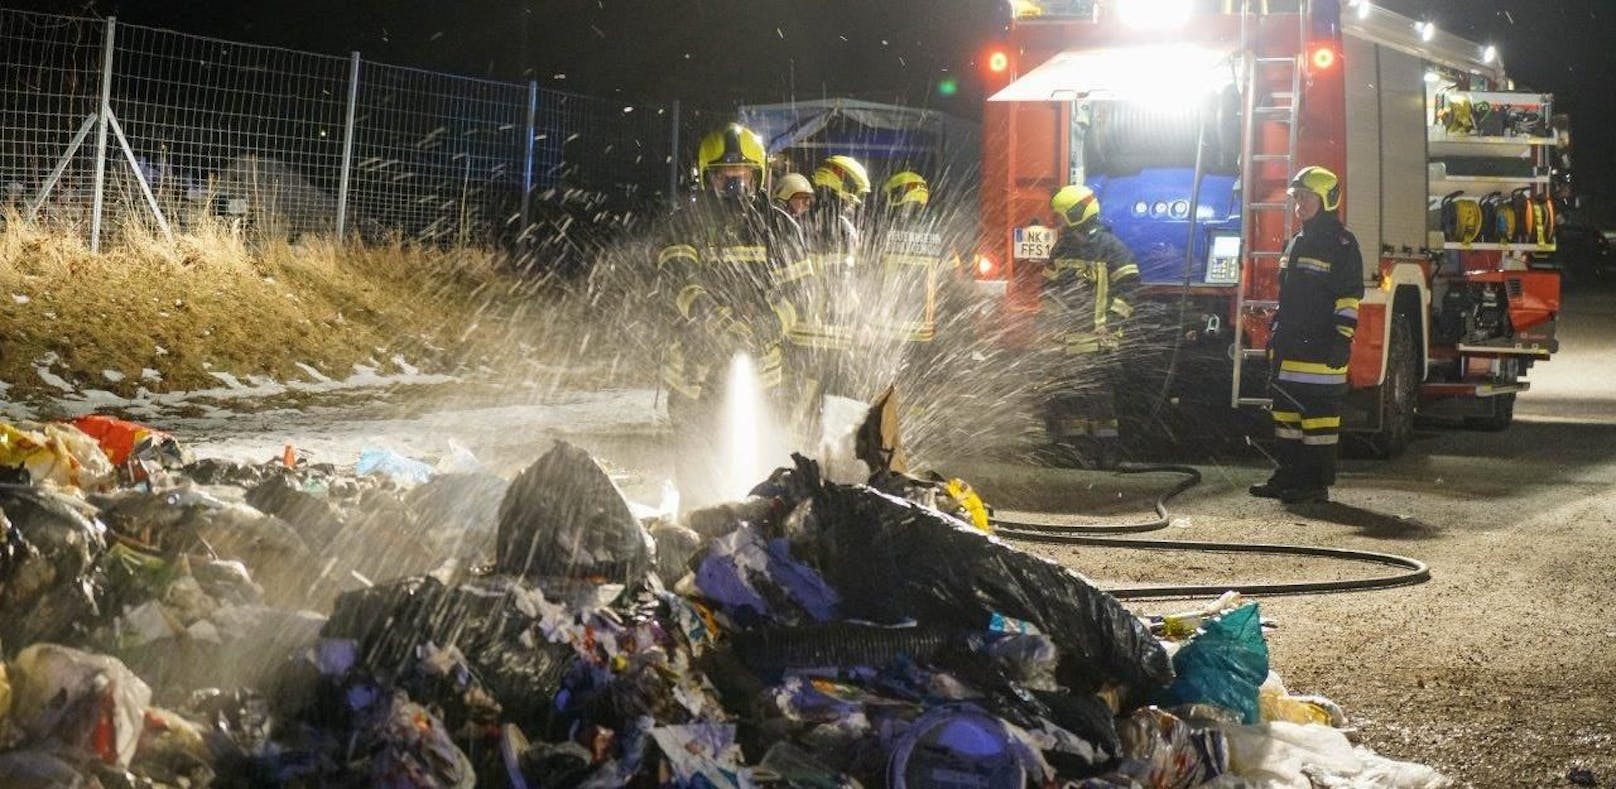 Restmüll fing in Müllabfuhr-Auto Feuer